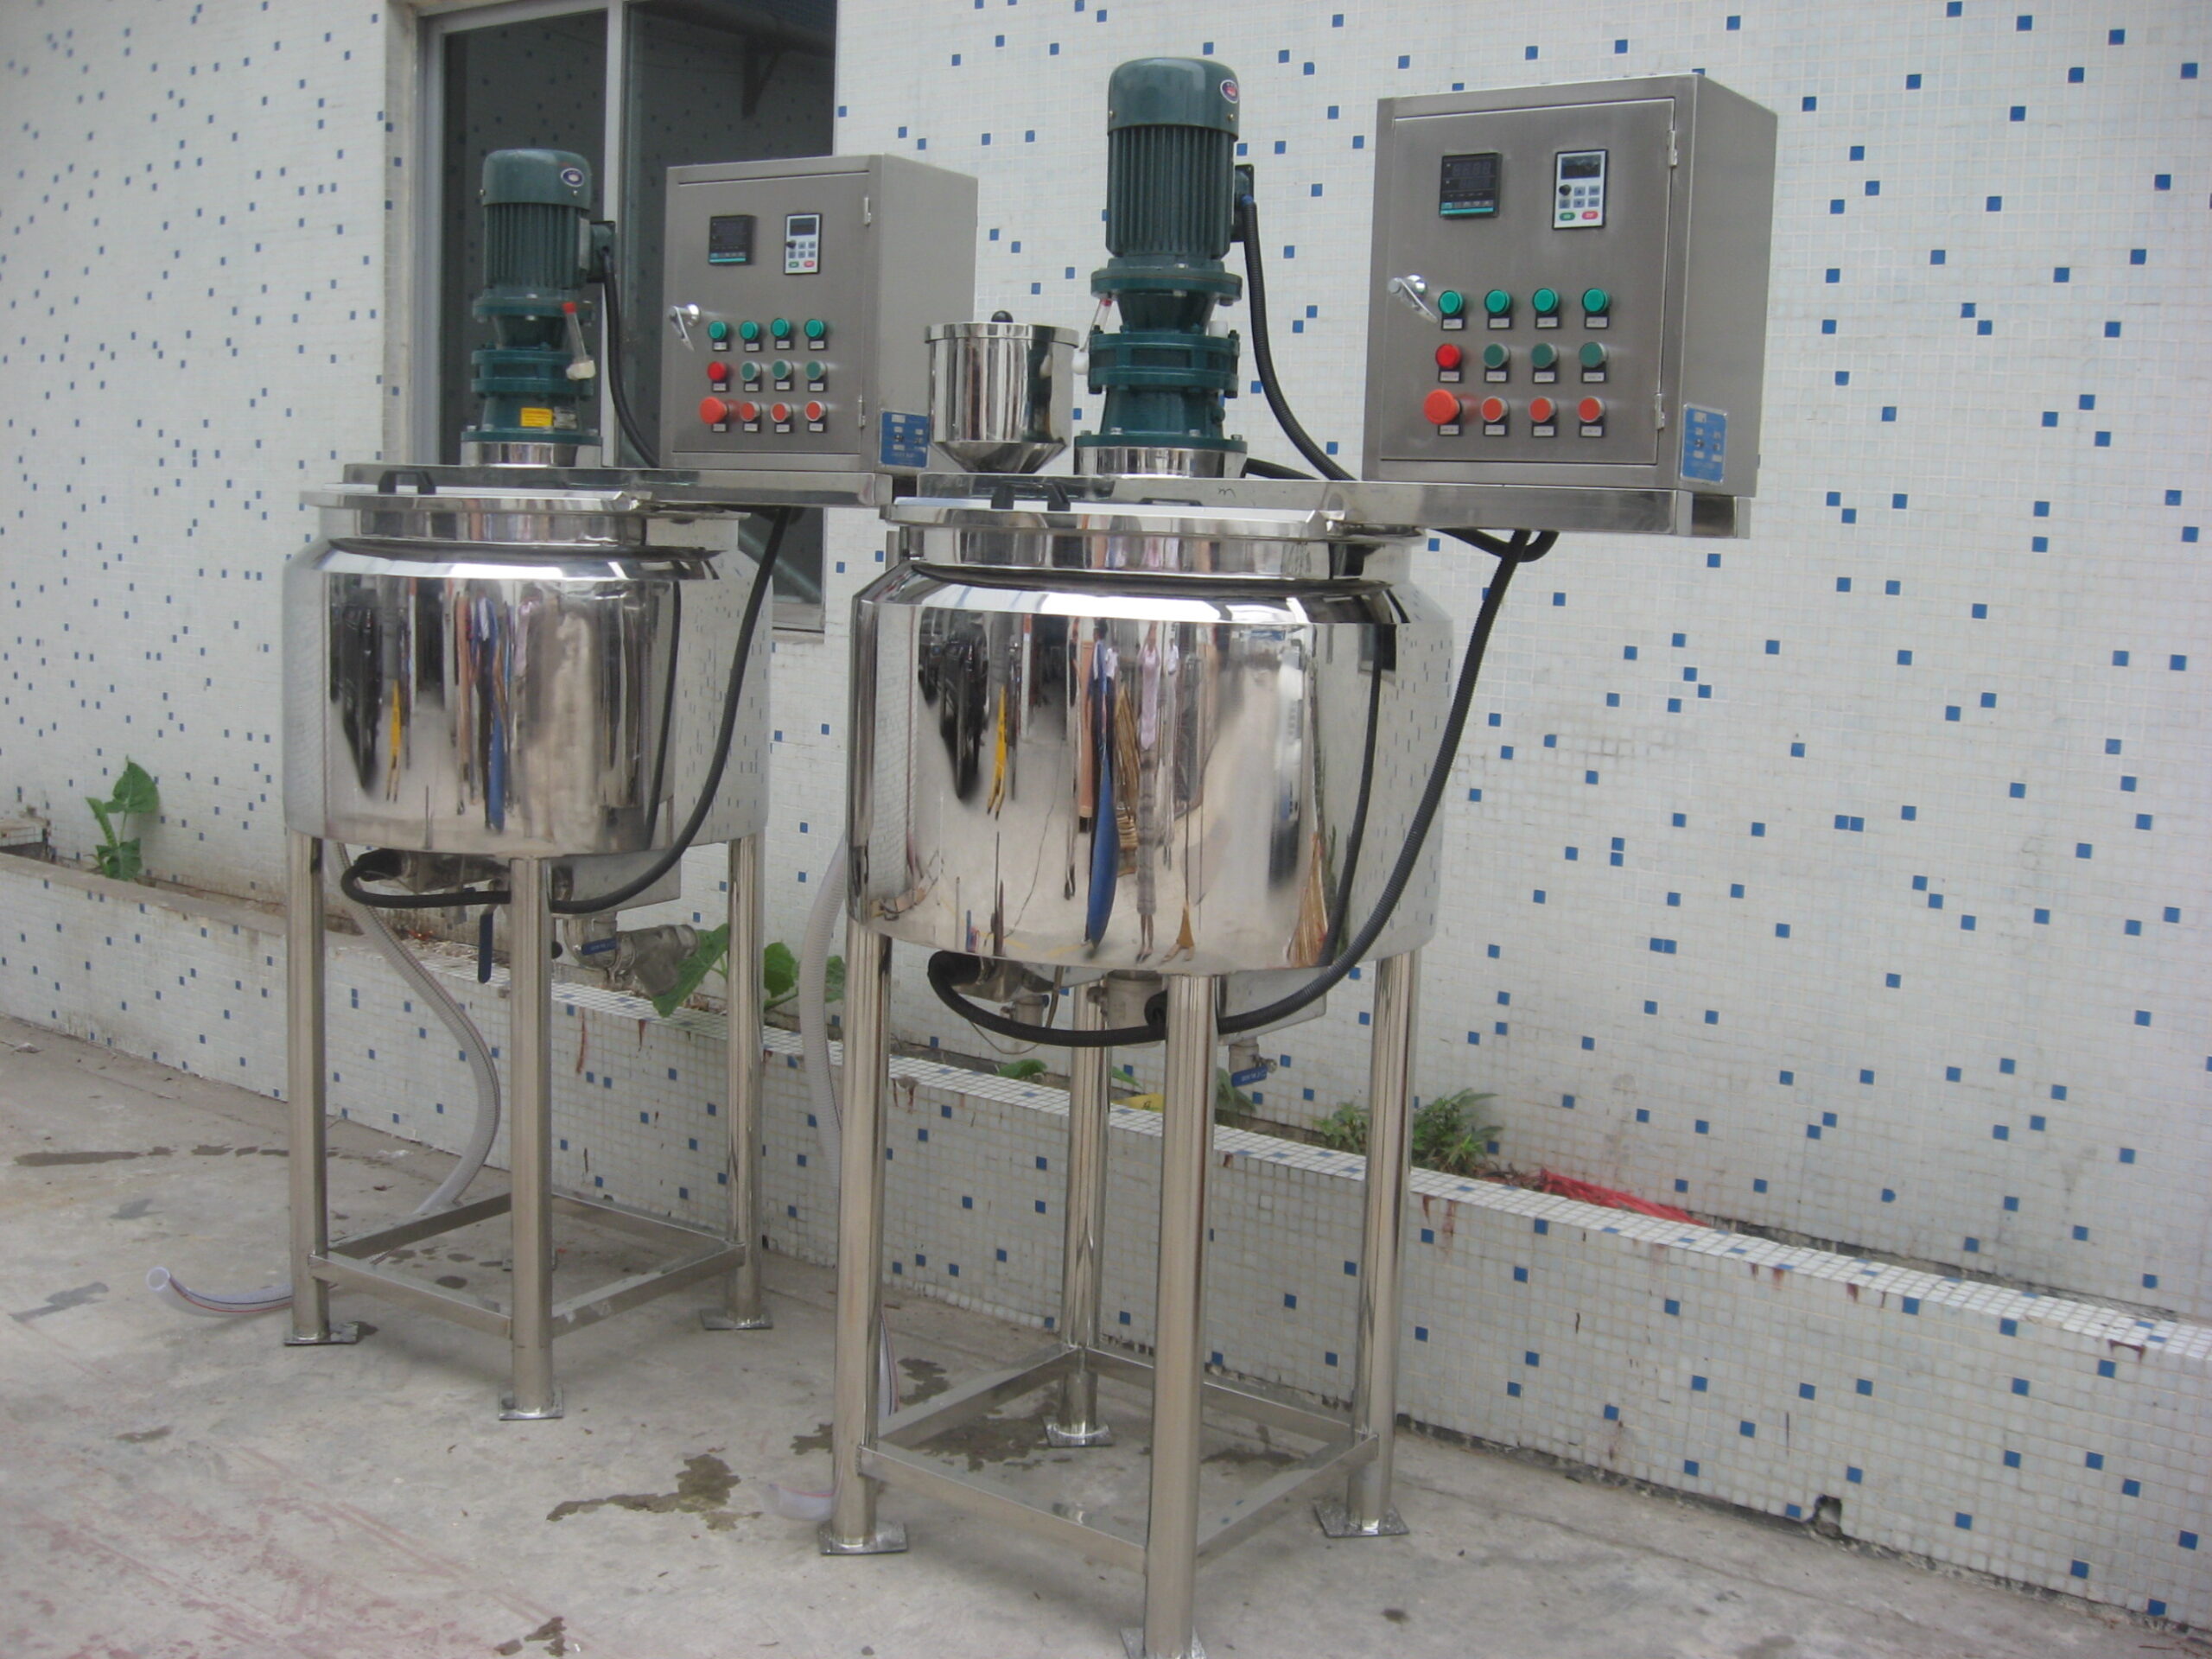 Best Hand Sanitizer Production Stirring Vessel Cosmetic Cream Making Machine Company - GUANYU